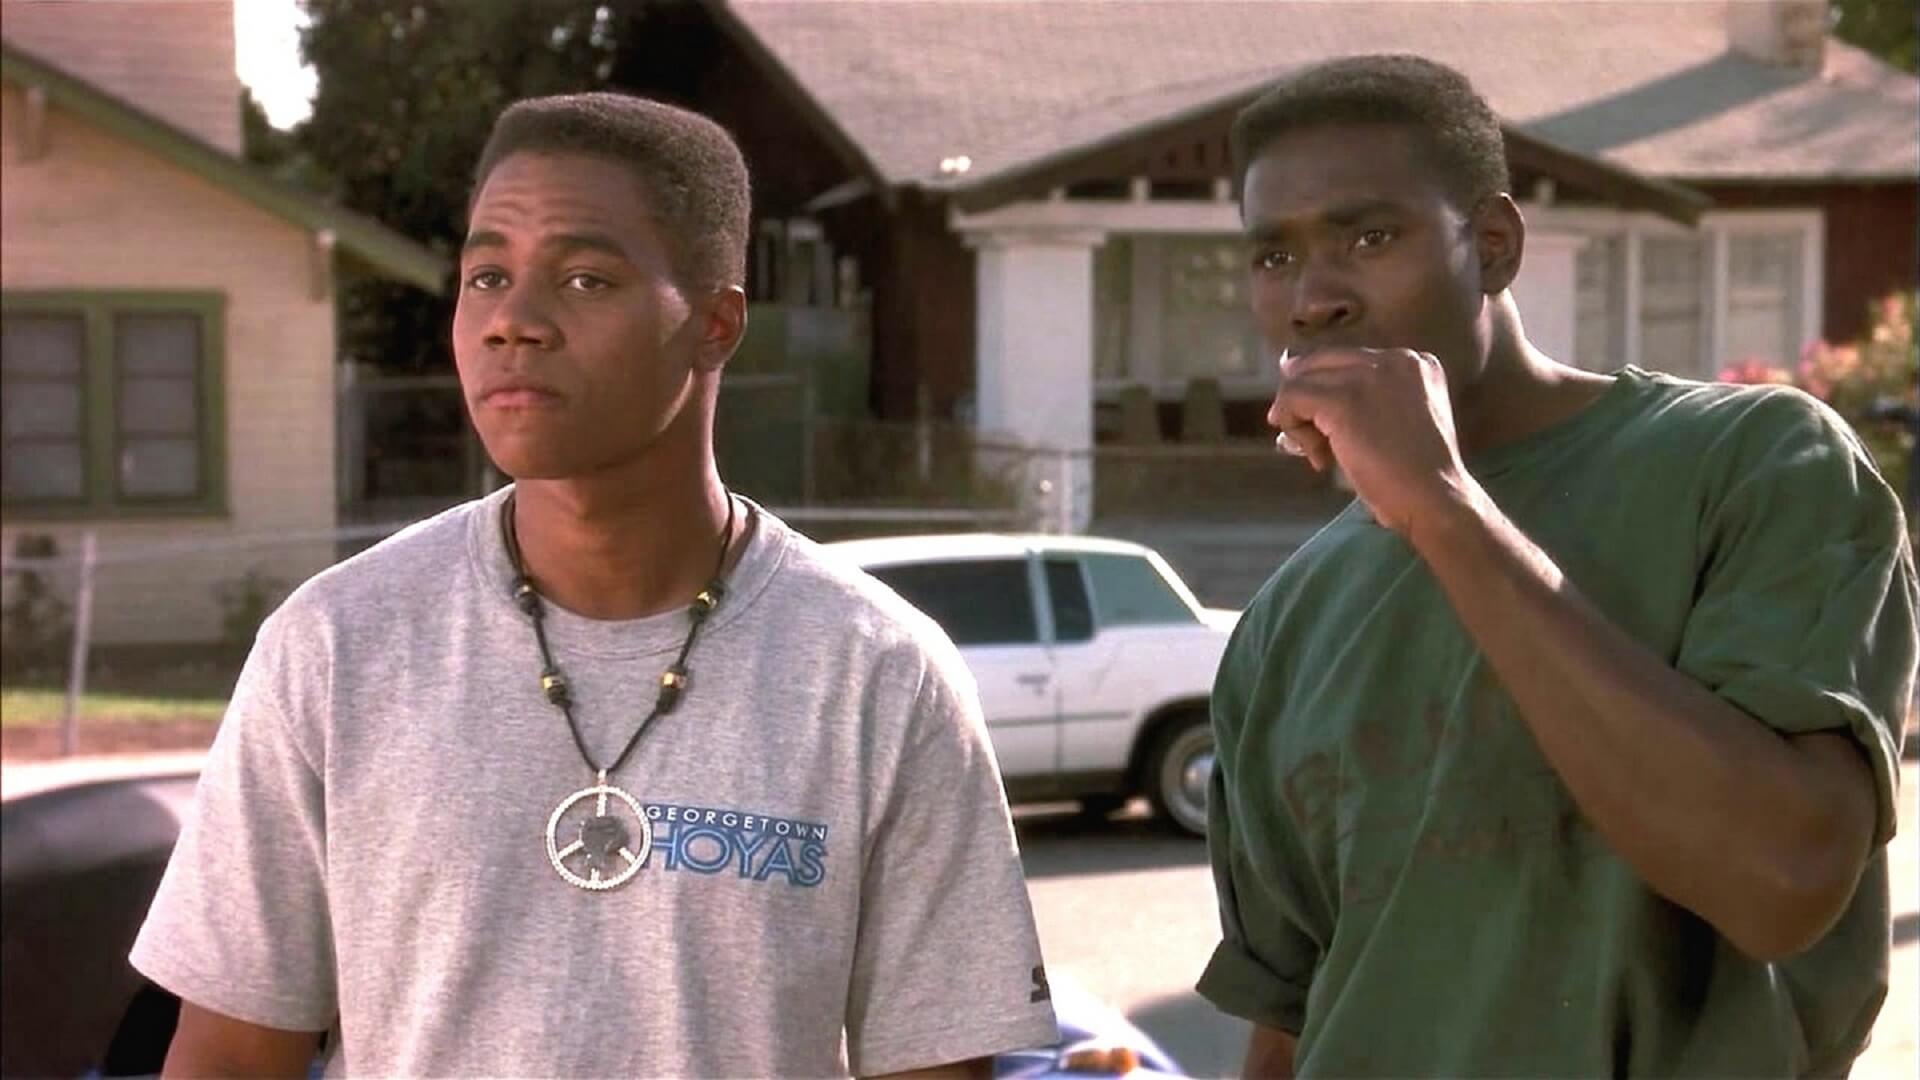 Младшего брата по соседству. Южный централ Лос Анджелес. Ребята с улицы (1991) Boyz n the Hood.